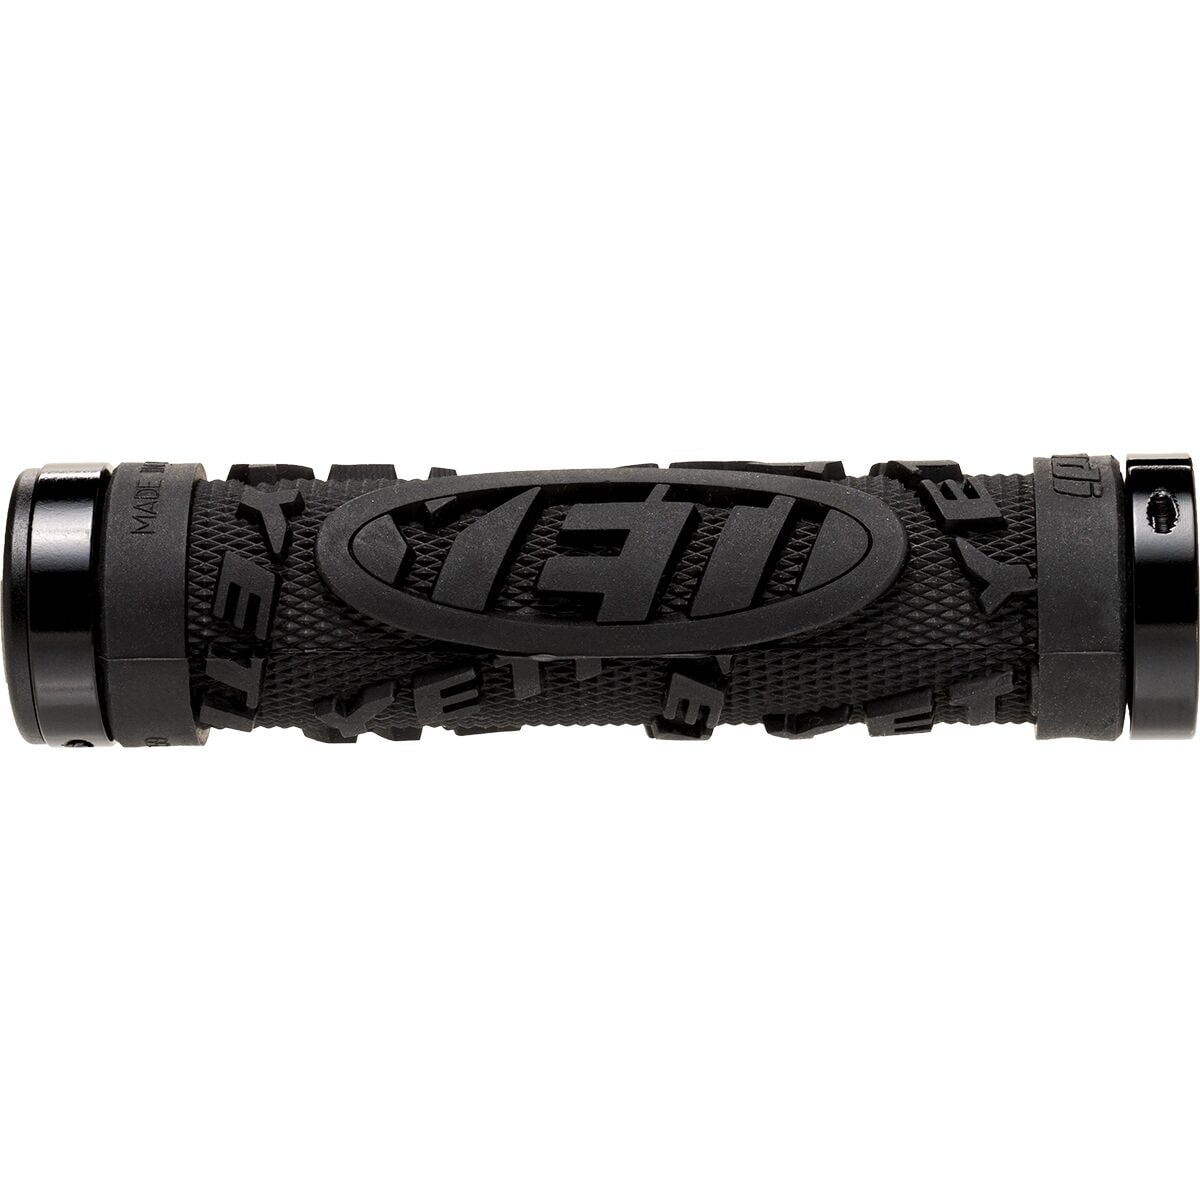 ODI Yeti Hard Core Lock-On Grips Black, One Size